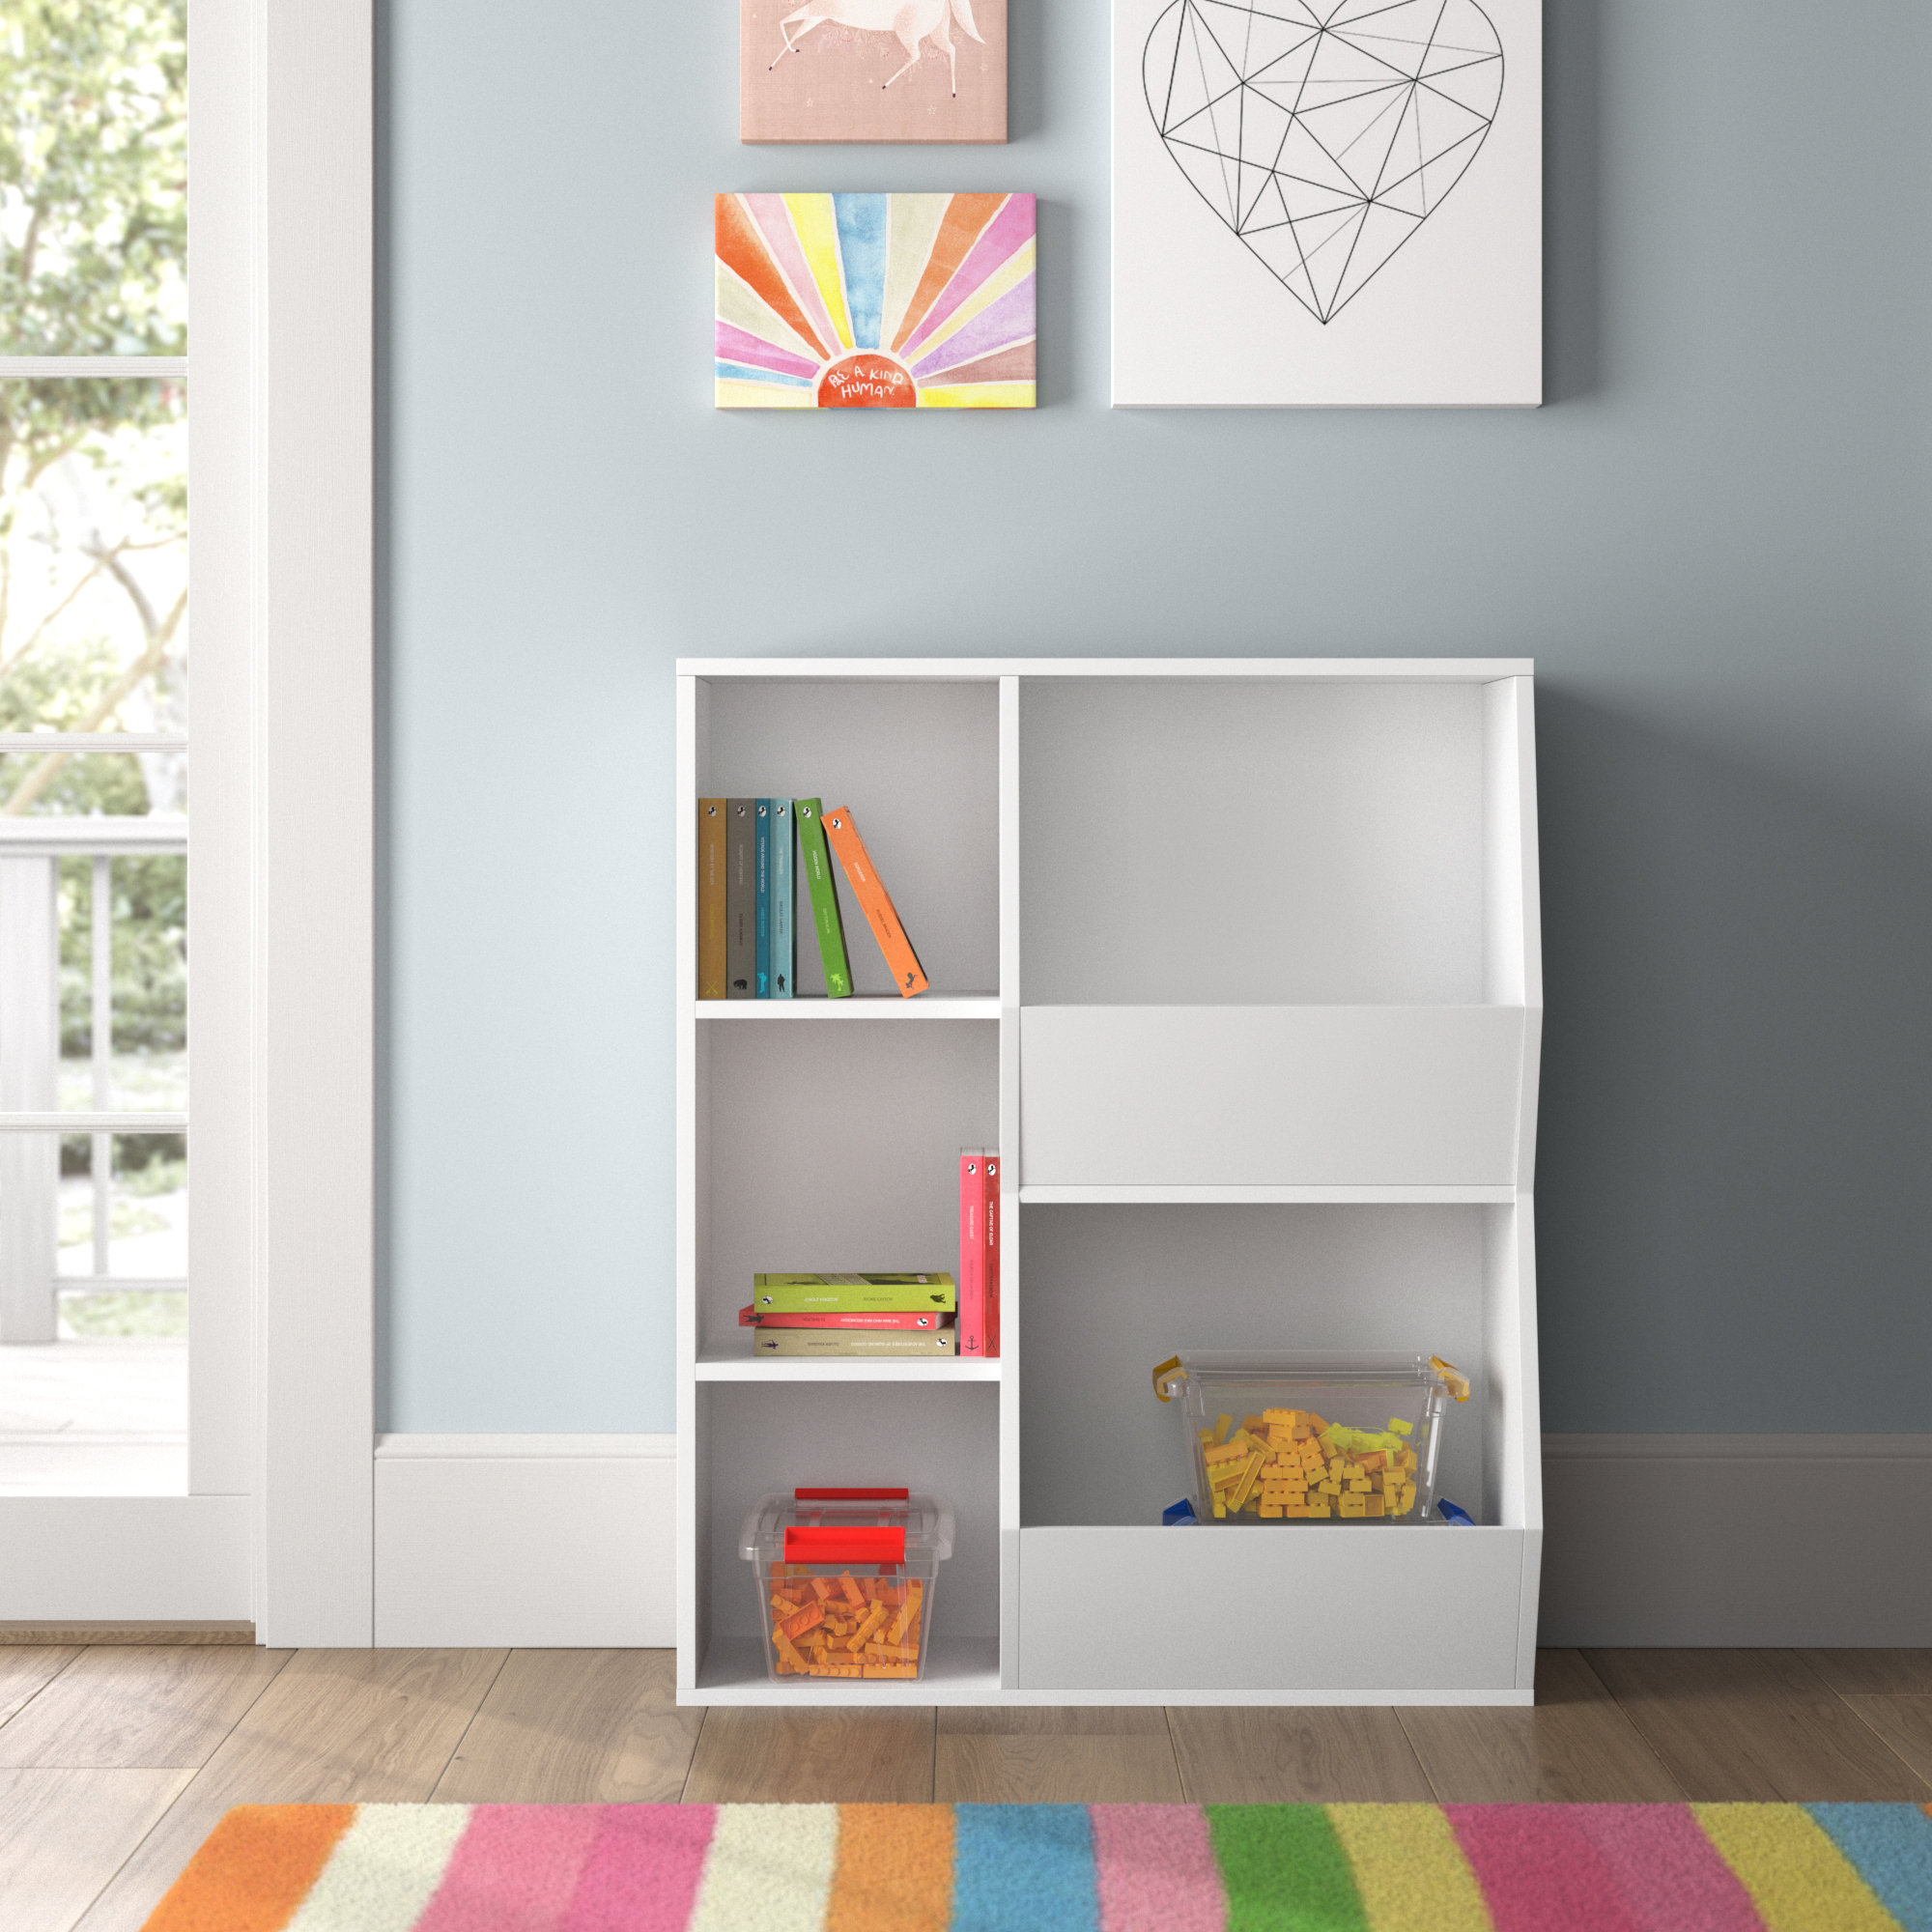 Utex Toy Storage Organizer with Bookcase, Kids Bin Storage Unit with 3 Opening Shelves,White Toys Box Organizer, Size: 8